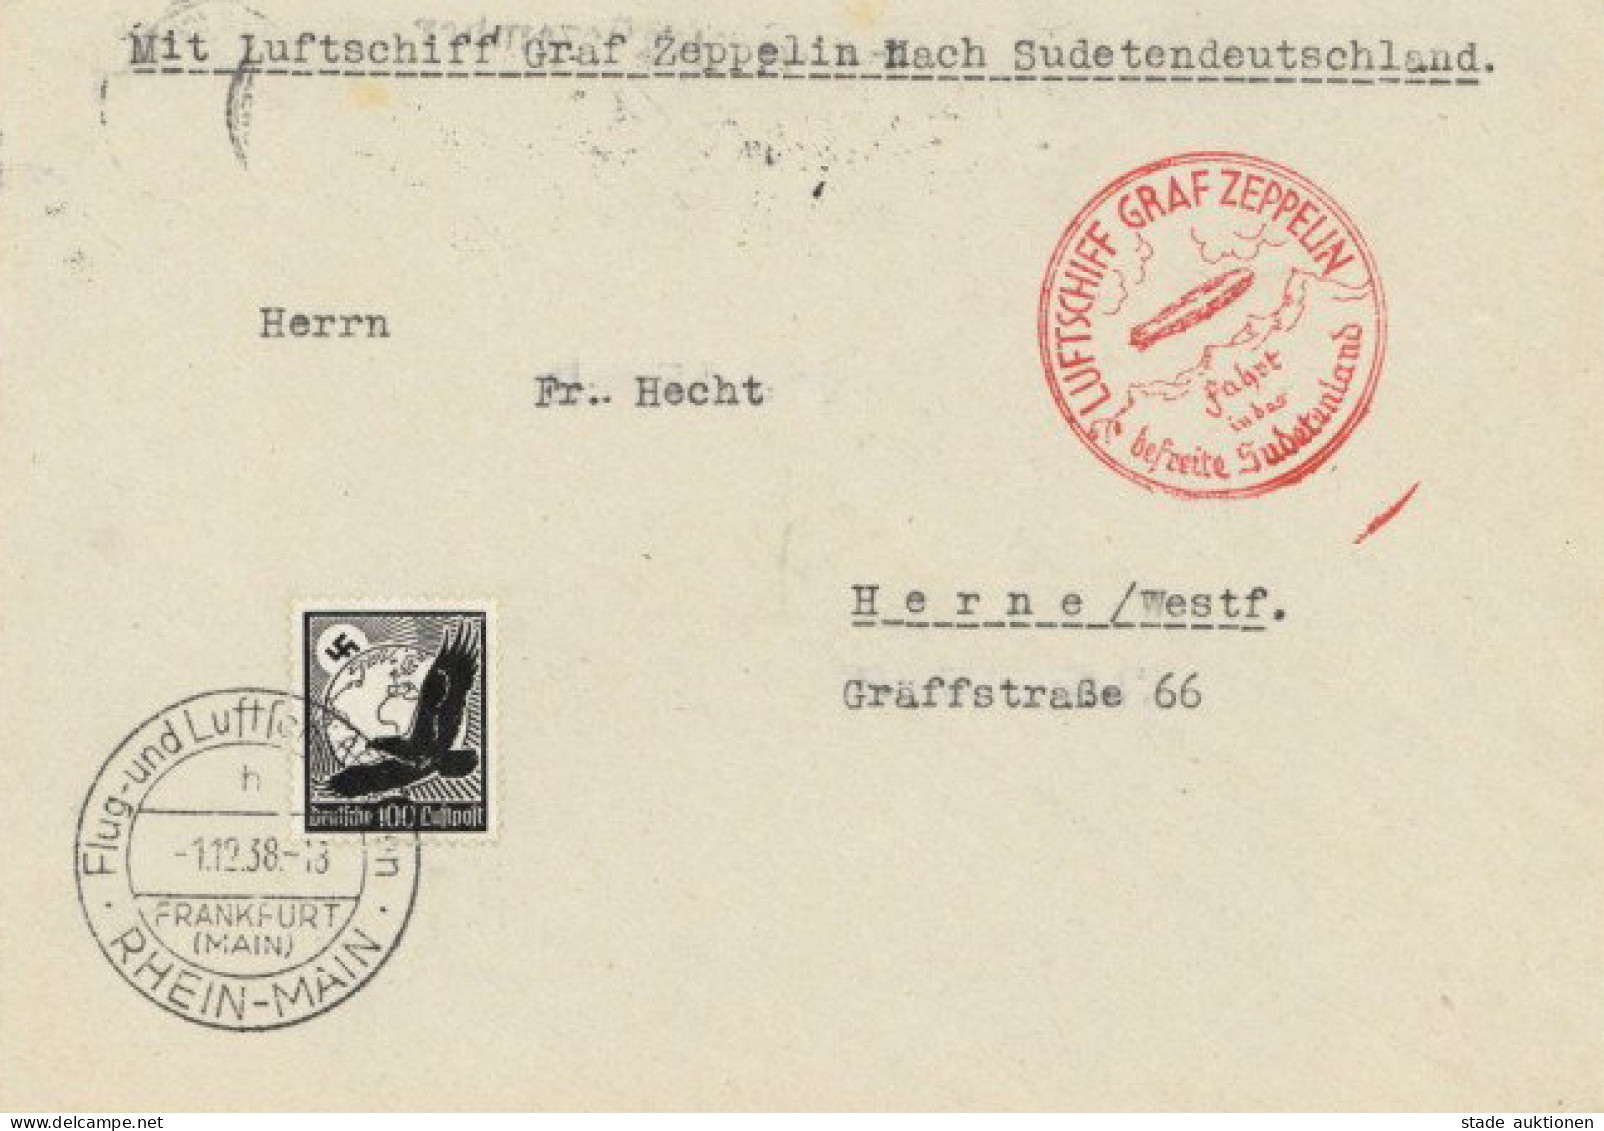 ZEPPELIN-BRIEF Sieger 456 - SUDETENLANDFAHRT 1938 I - Dirigeables